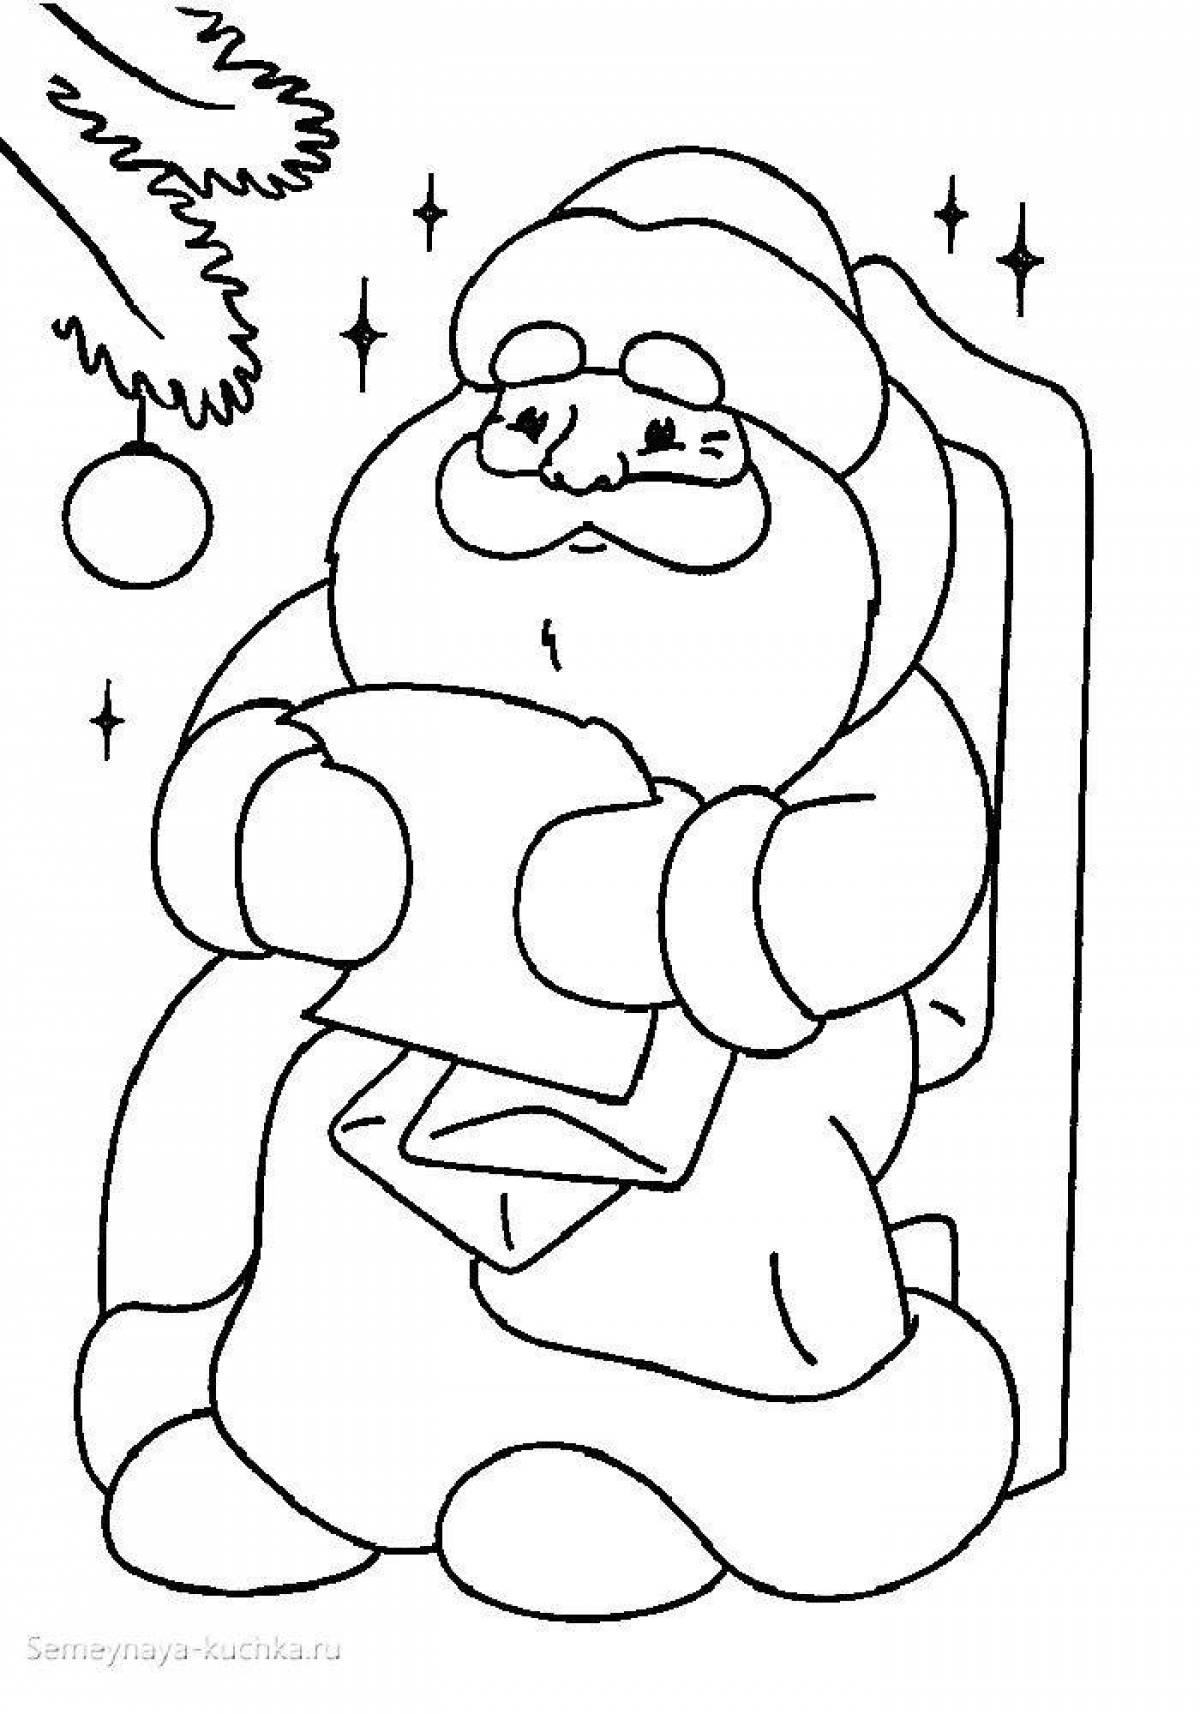 Coloring page festive santa claus